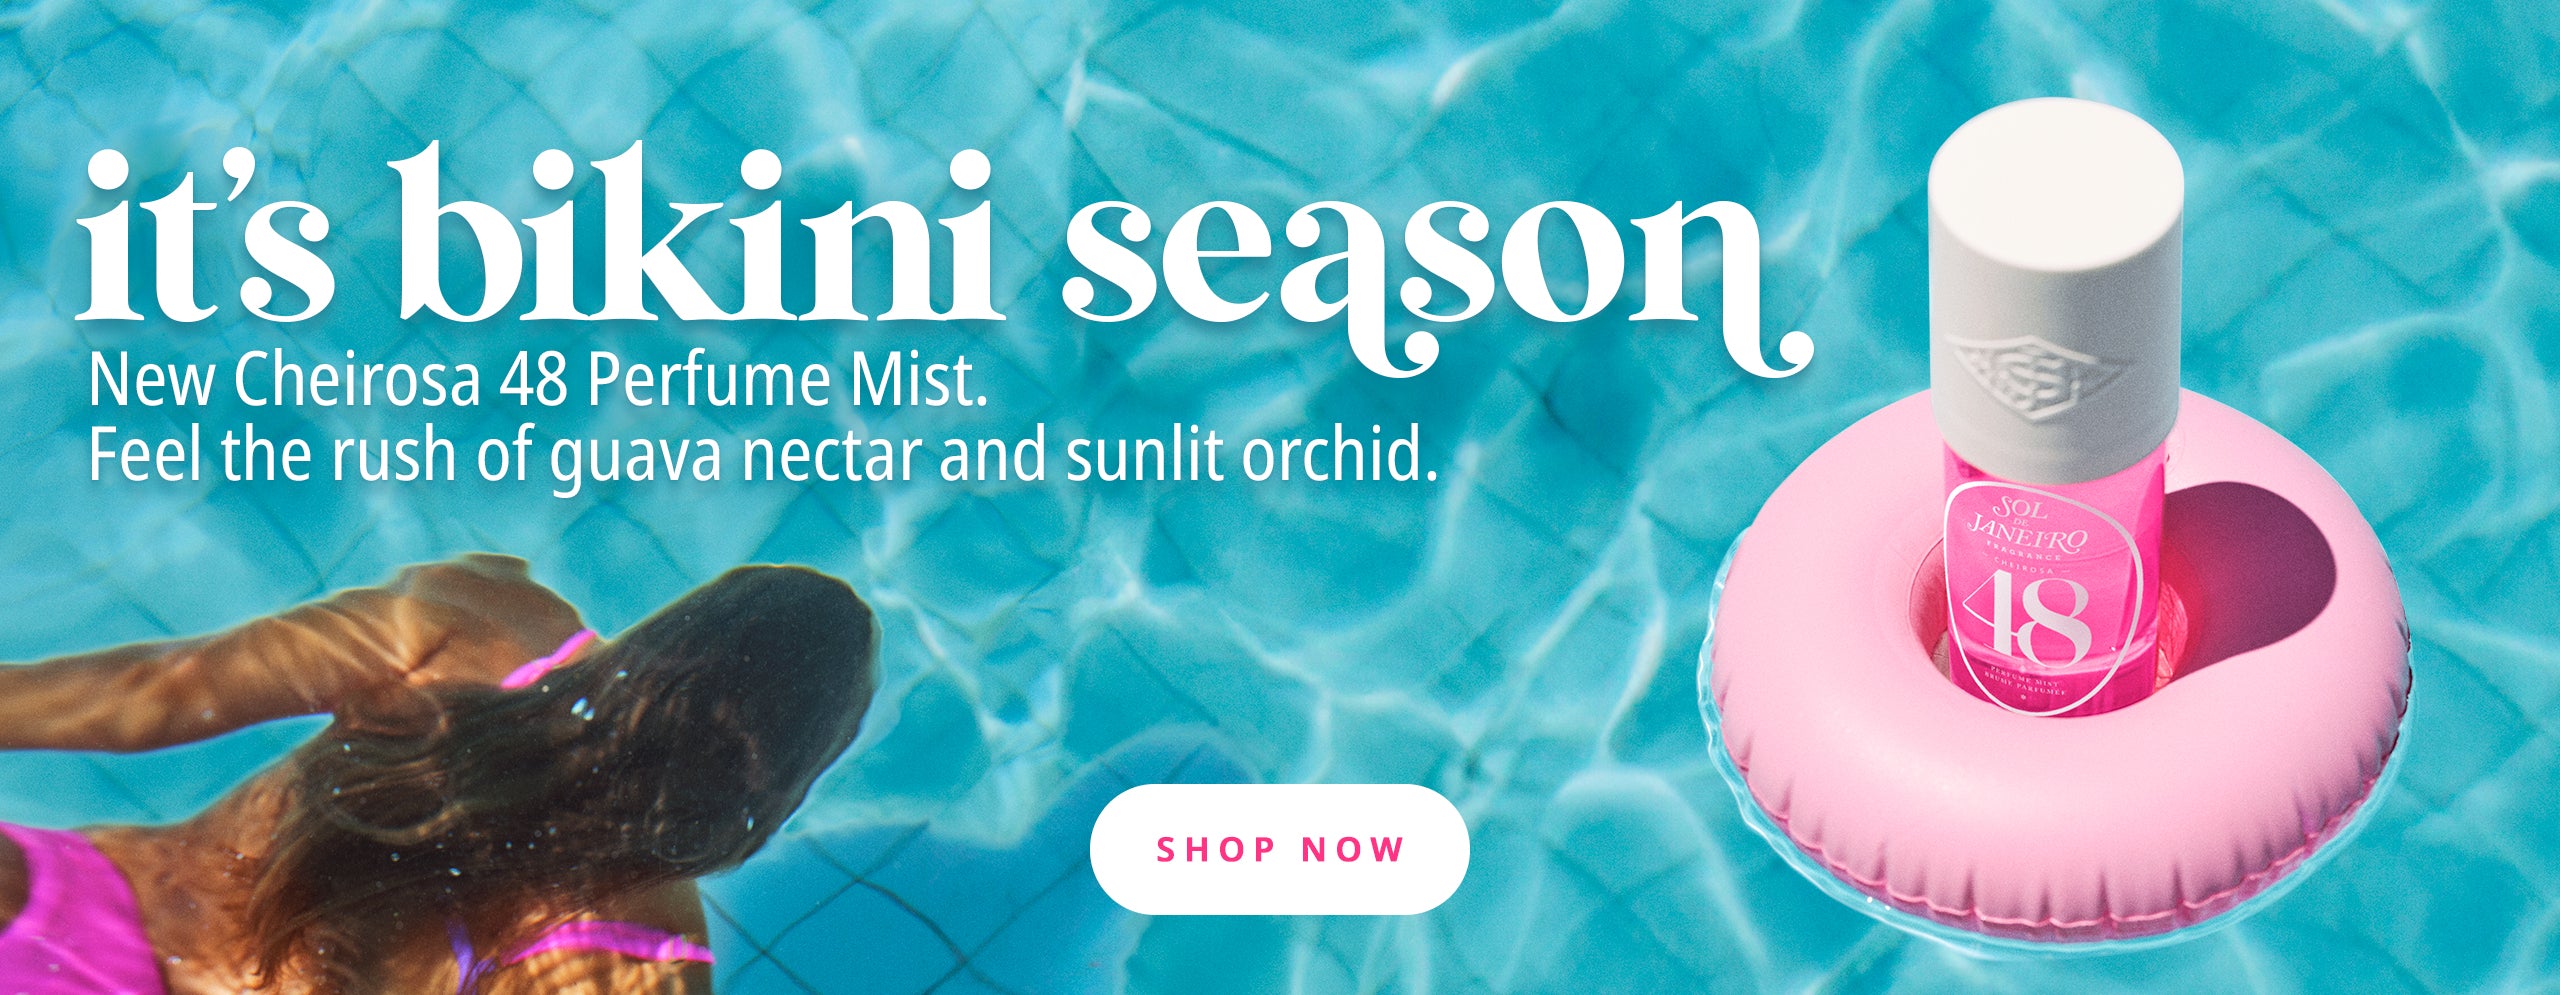 Its bikini season - new cheirosa 48 perfume mist. feel the rush of guava nectar and sunlit orchid.